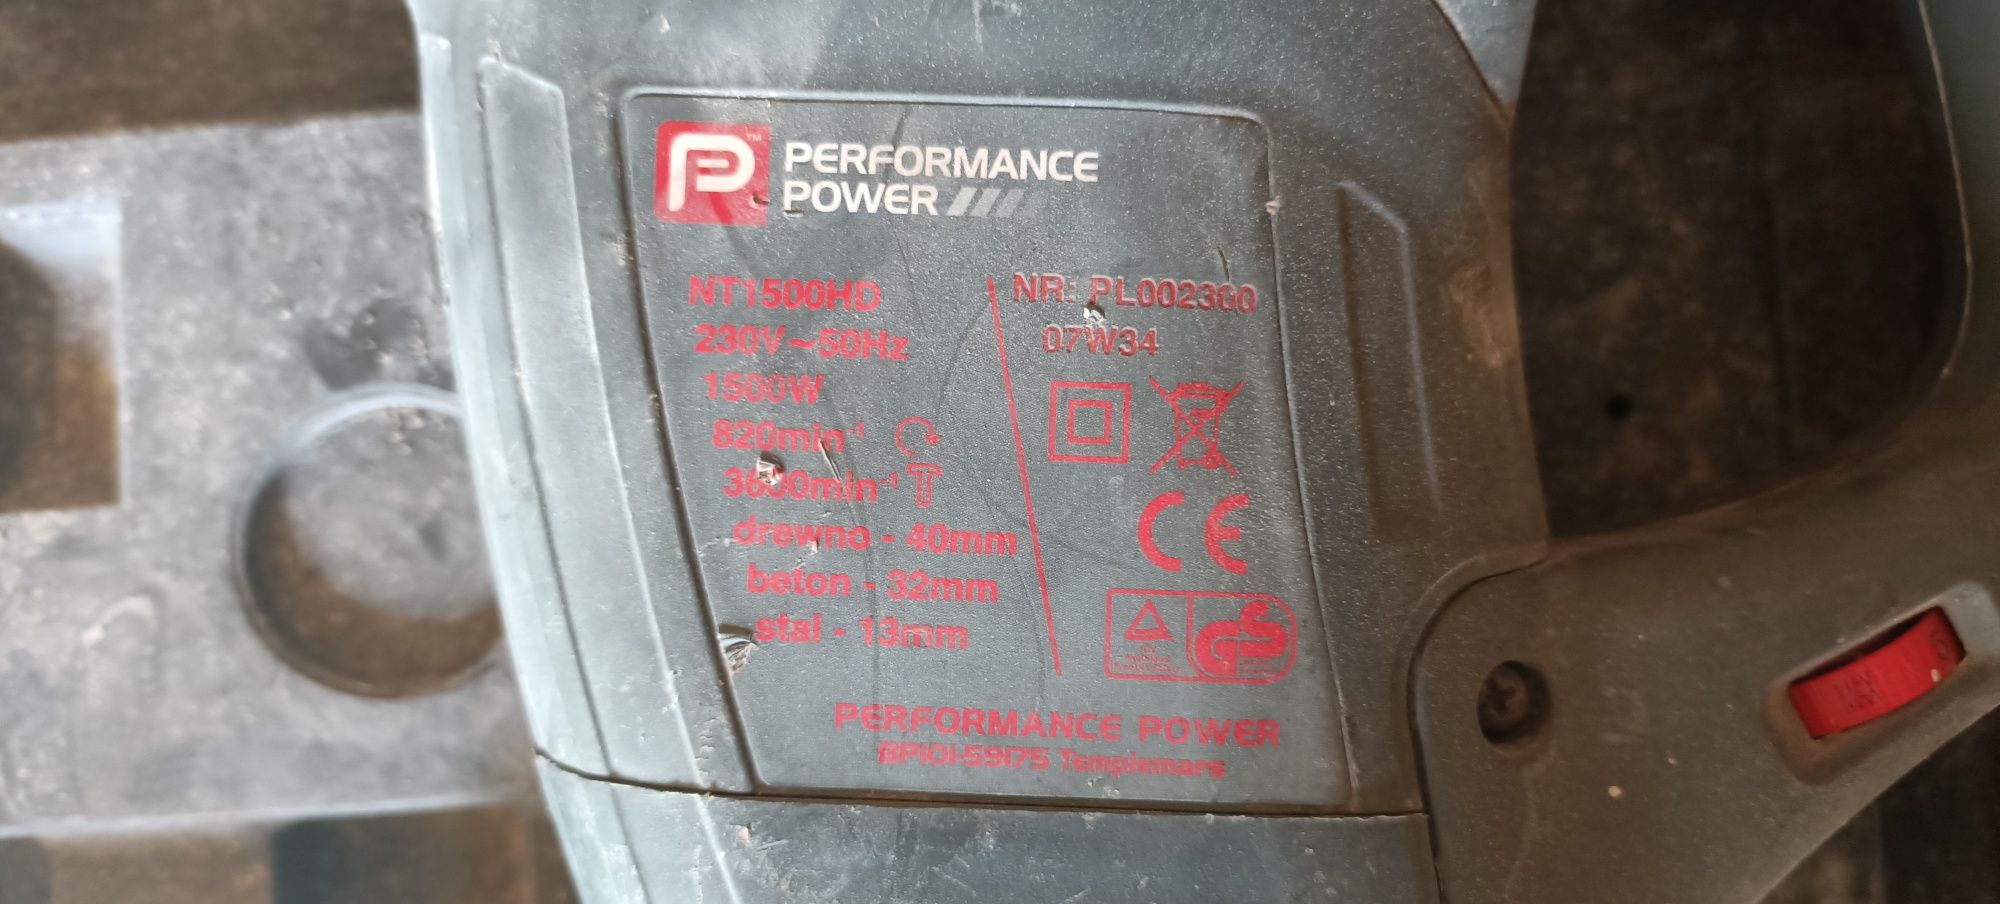 Młotowiertarka Performance Power NT1500 HD